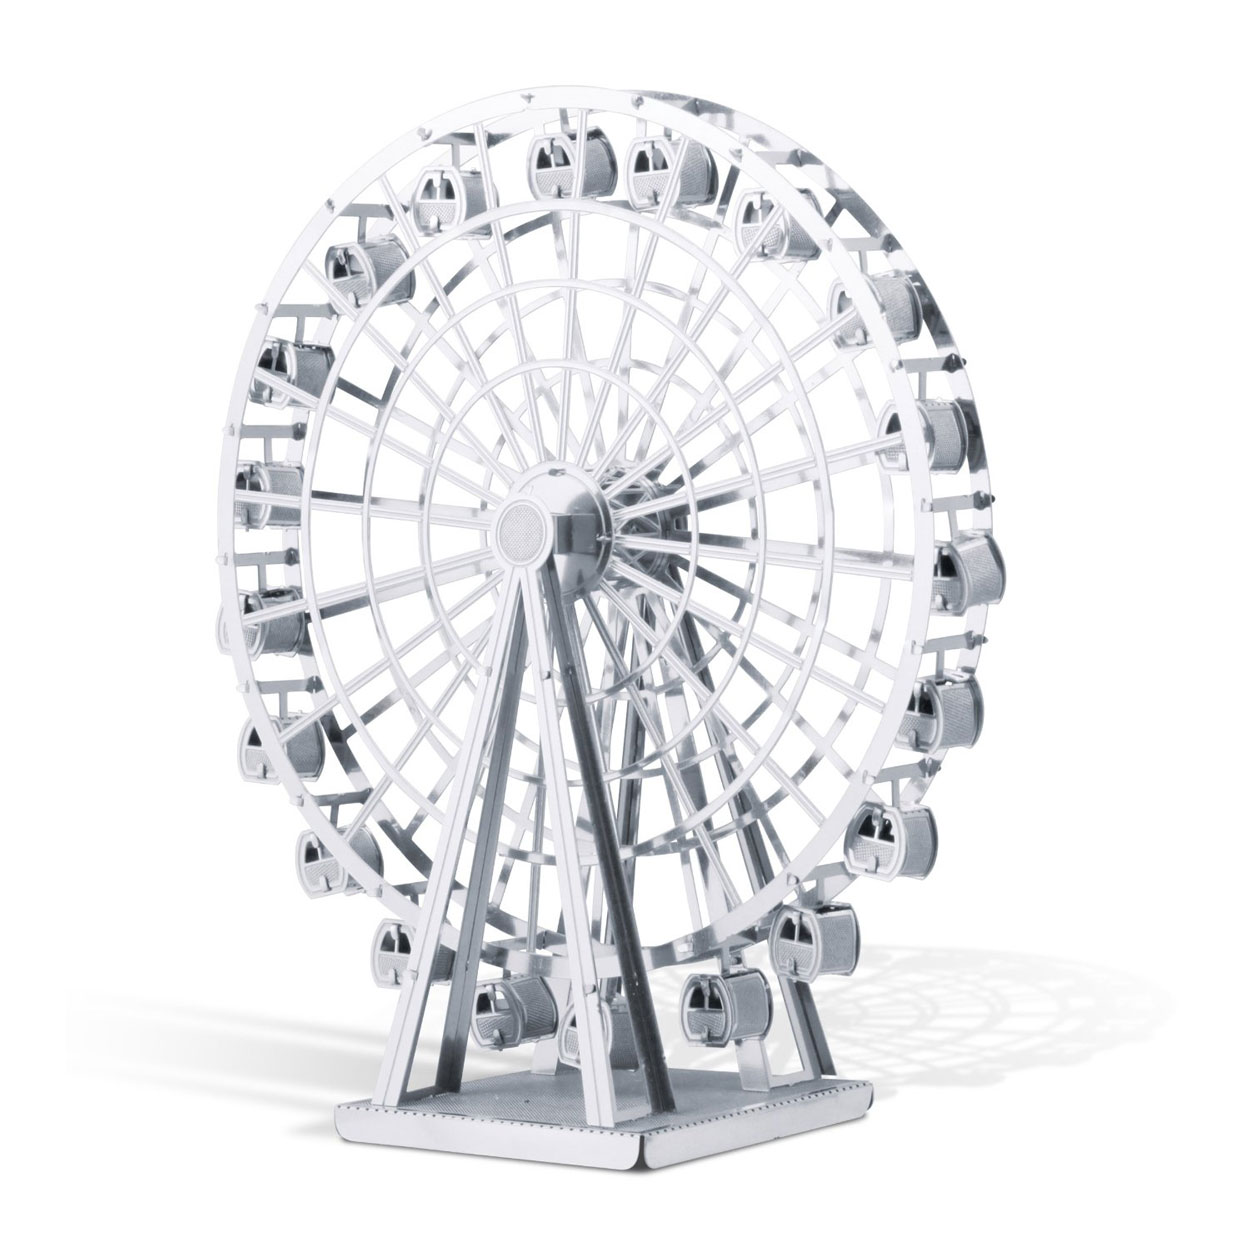 Metal Earth Ferris Wheel Zilver Editie